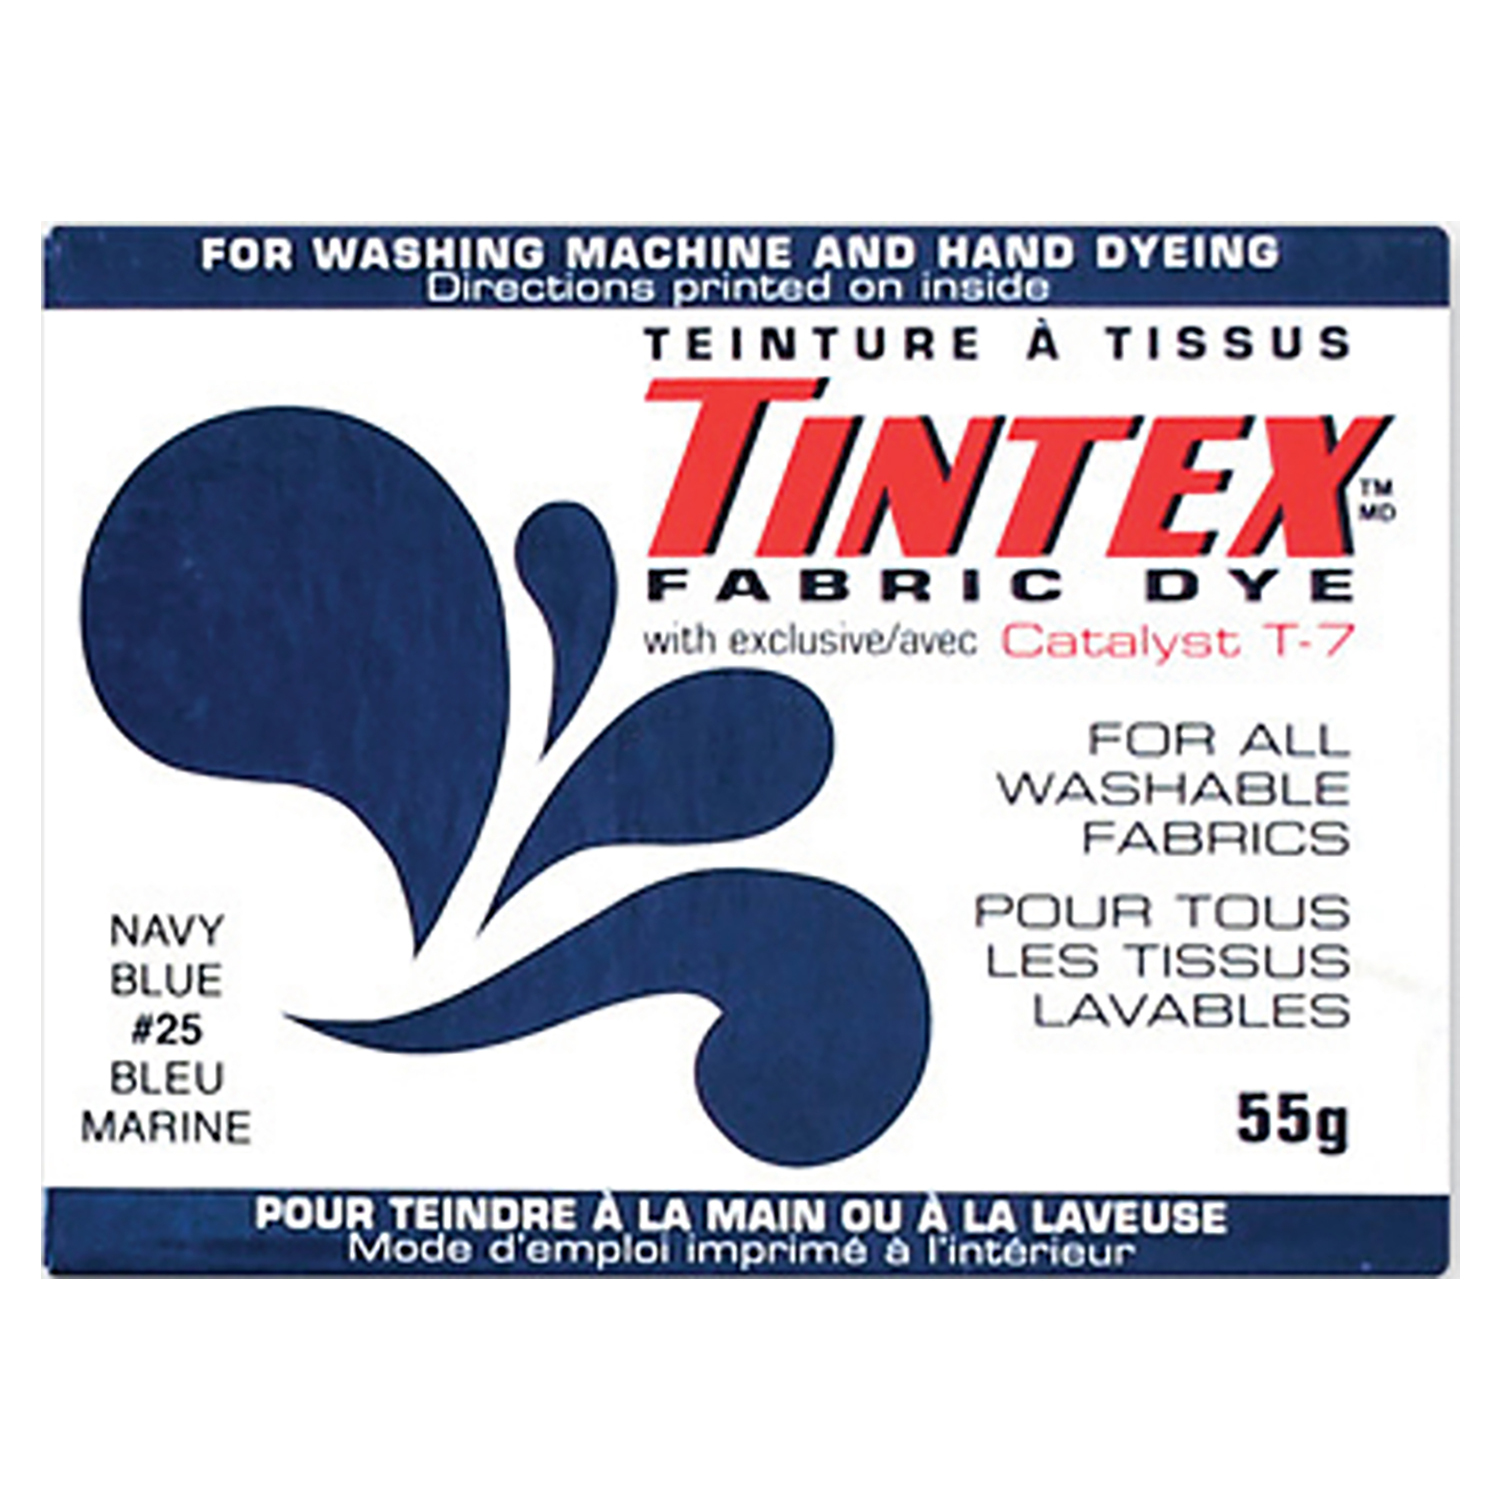 Tintex - All purpose fabric dye - #25 Navy blue